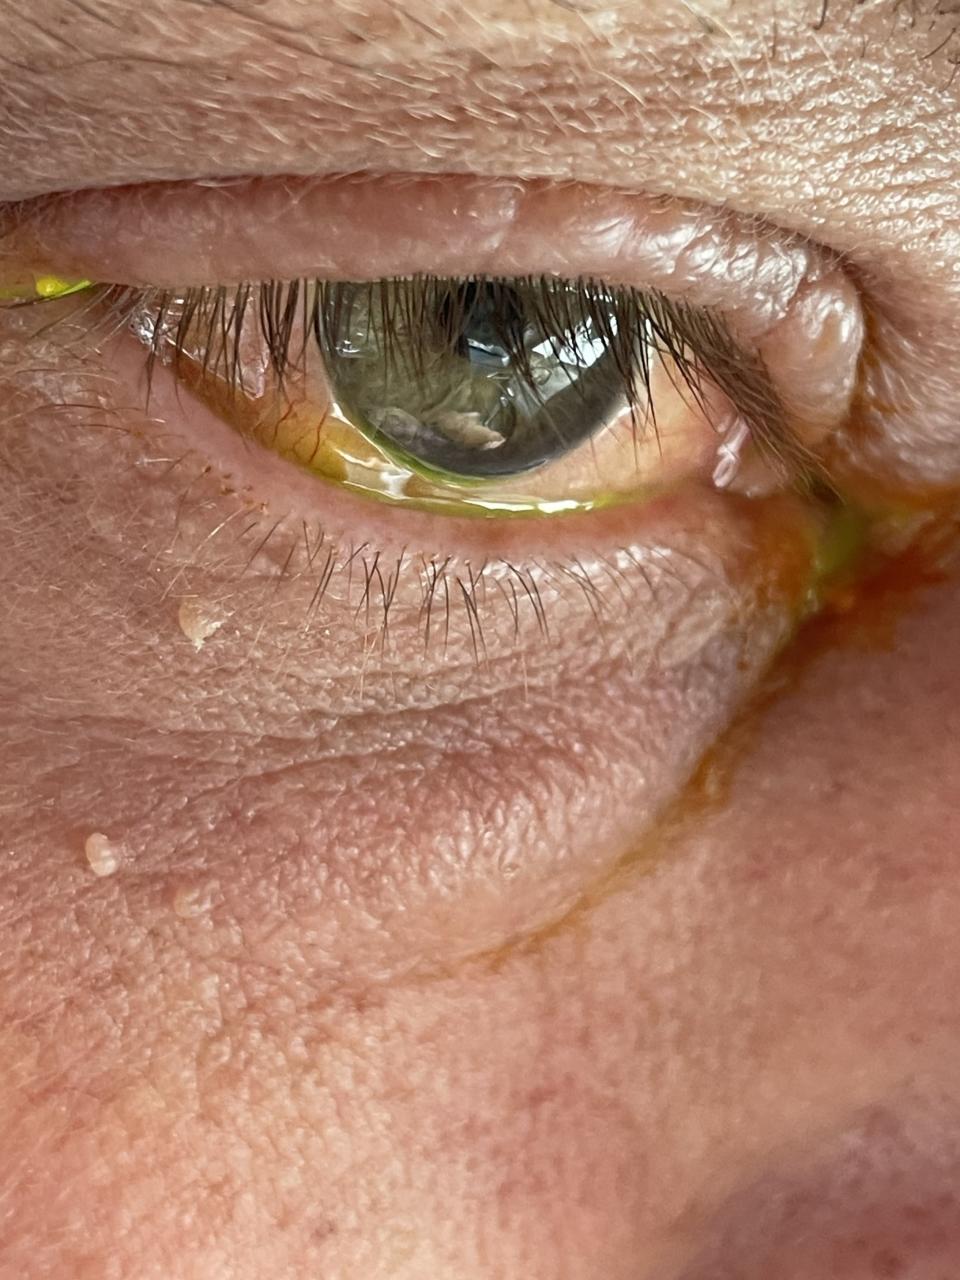 Stuart Vesty's 'Terminator' eye after he was bitten on the eyelid by a false widow spider. (Kennedy)